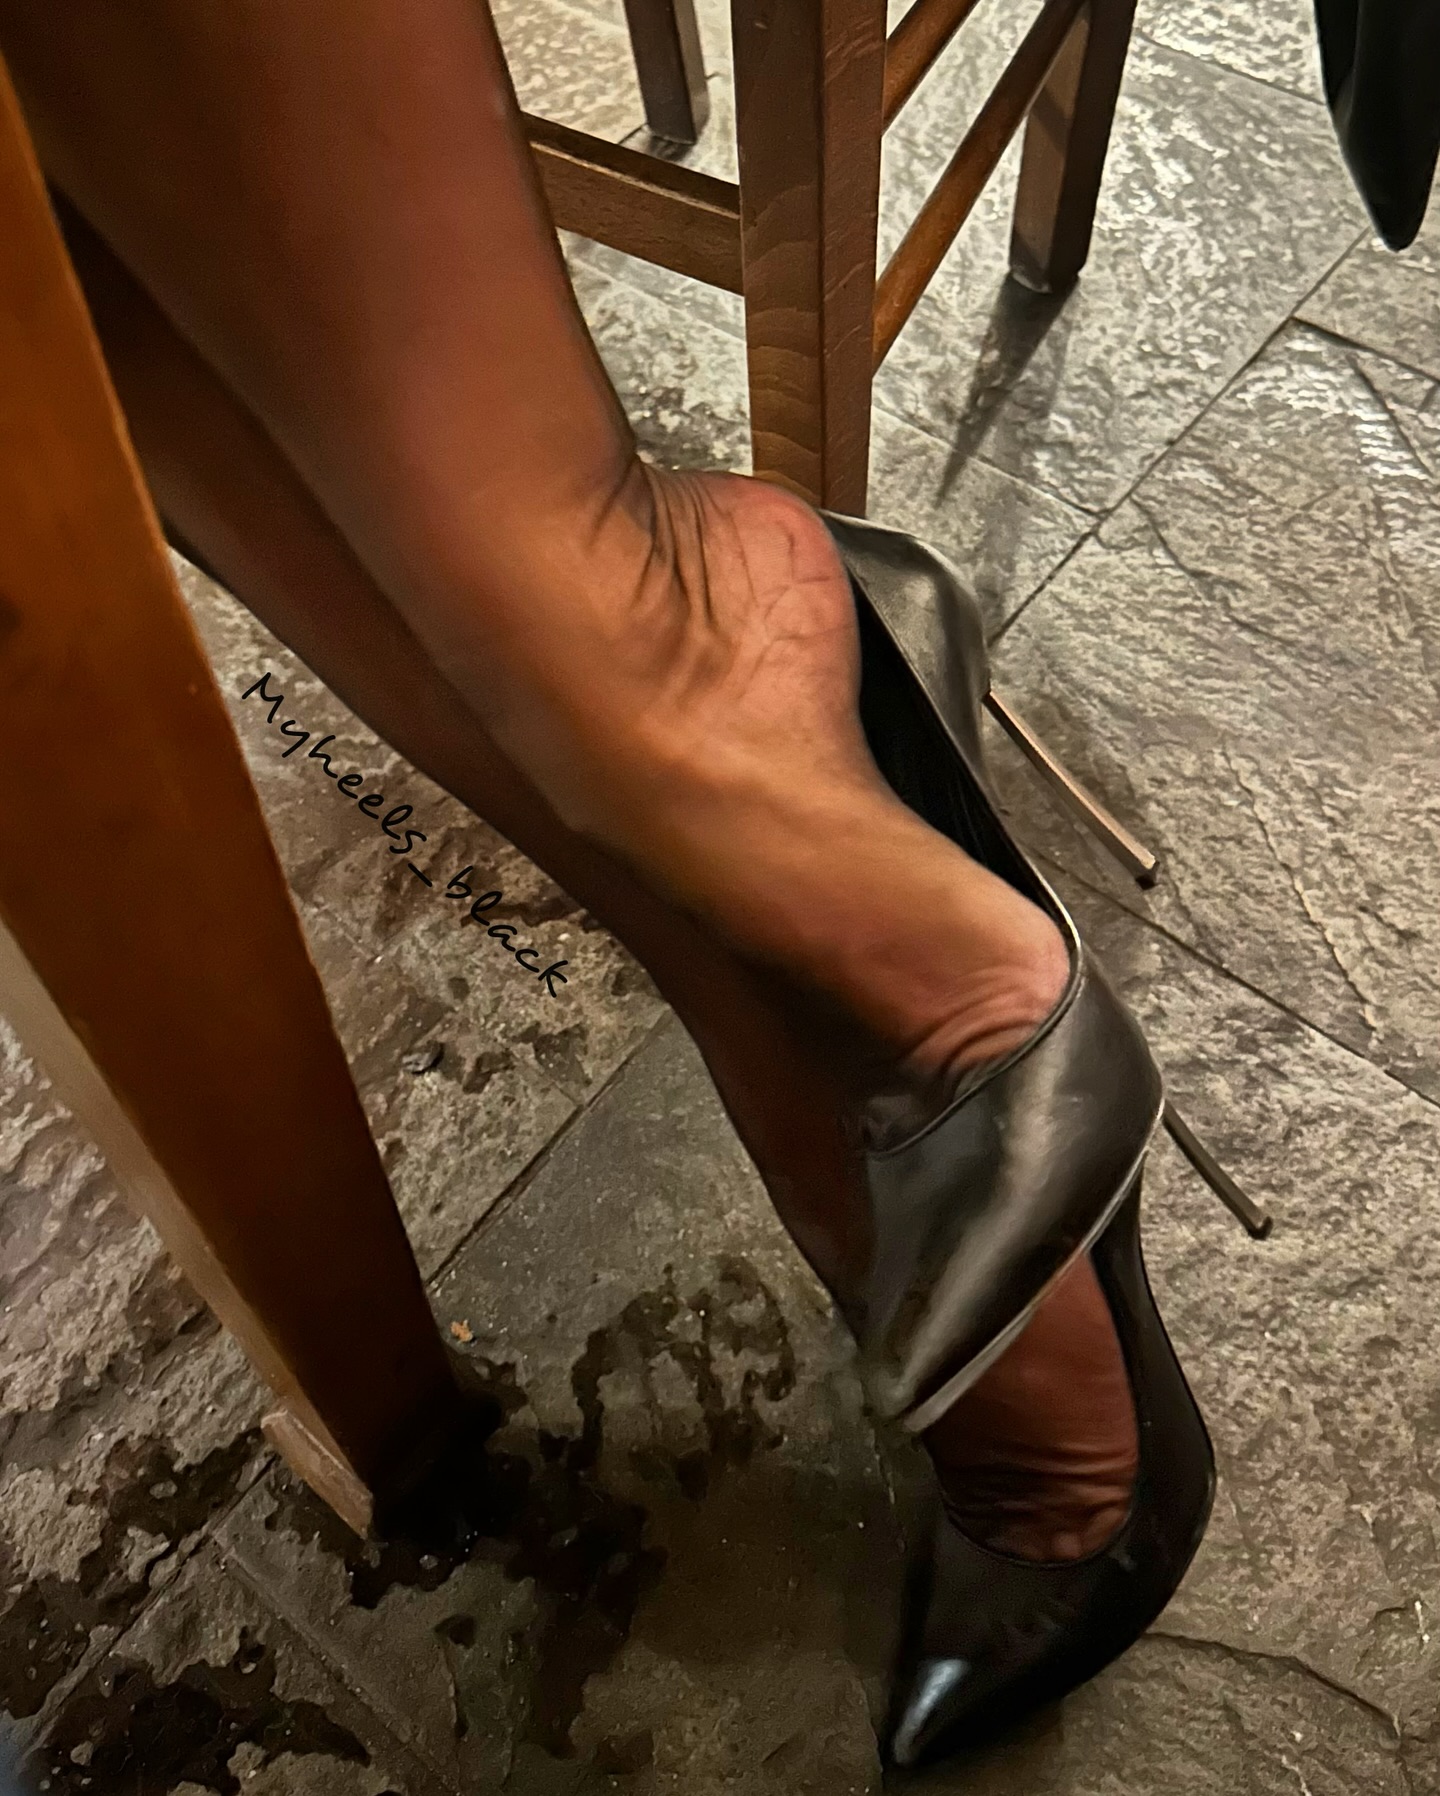 #louboutinheels #highheels #tacchi #louisvitton #tacco12 #shoeaddict #heelsaddict #stilettoheels #italianshoes #heels #heelsfashion #sokate120 #redsole #tacchiaspillo #elegance #shoestyle #louboutin #modelshoes #feet #instagood #instafashion #tacones #instalove #redsole #legs